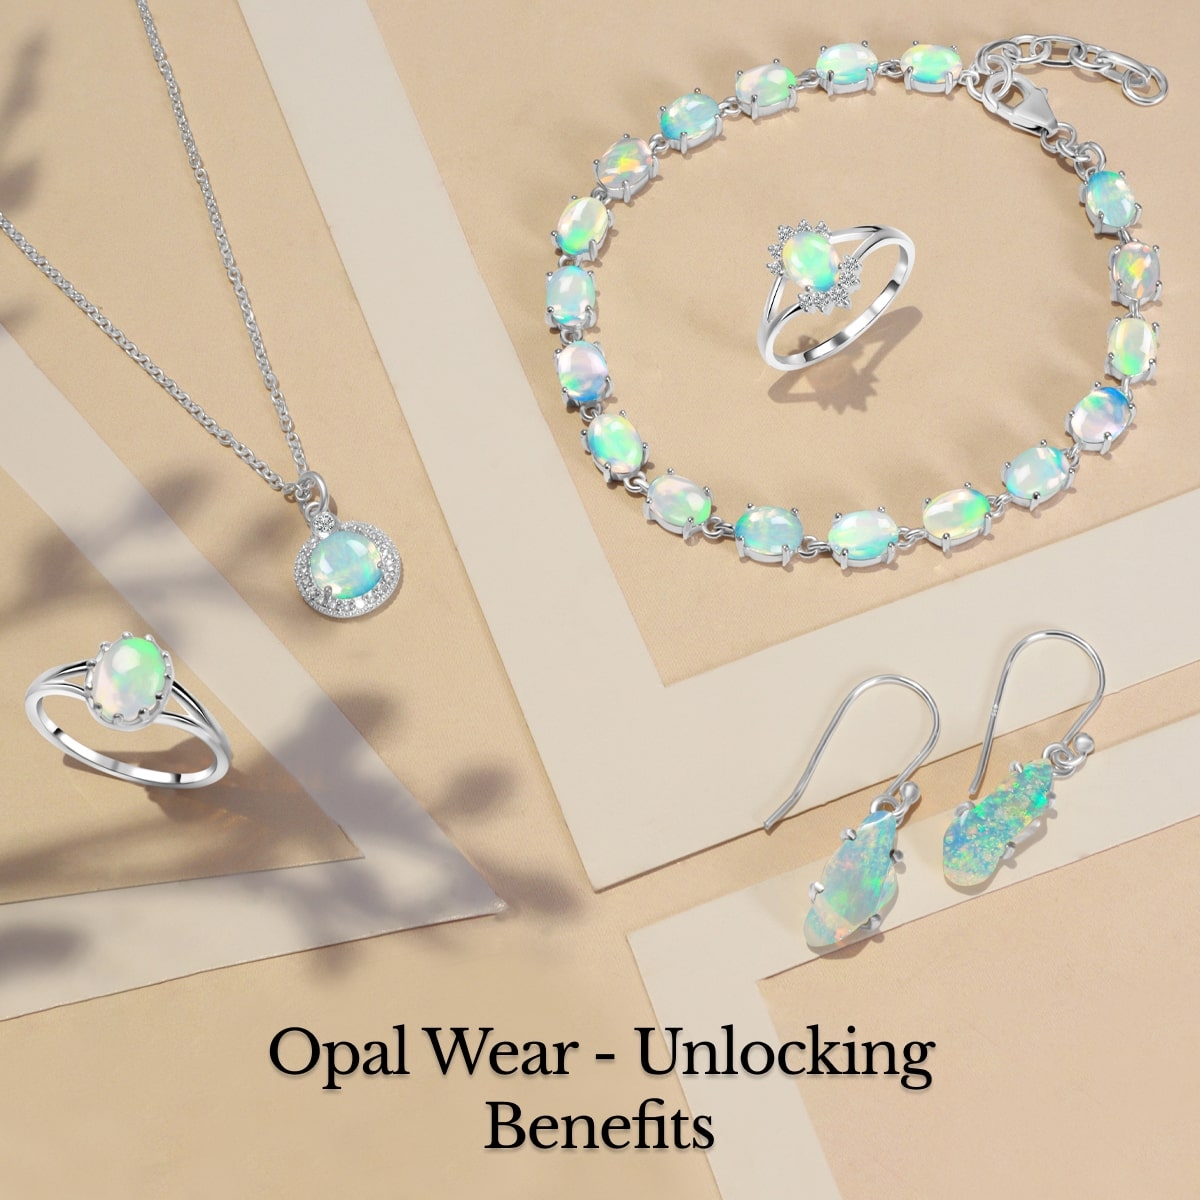 Benefits of wearing Opals